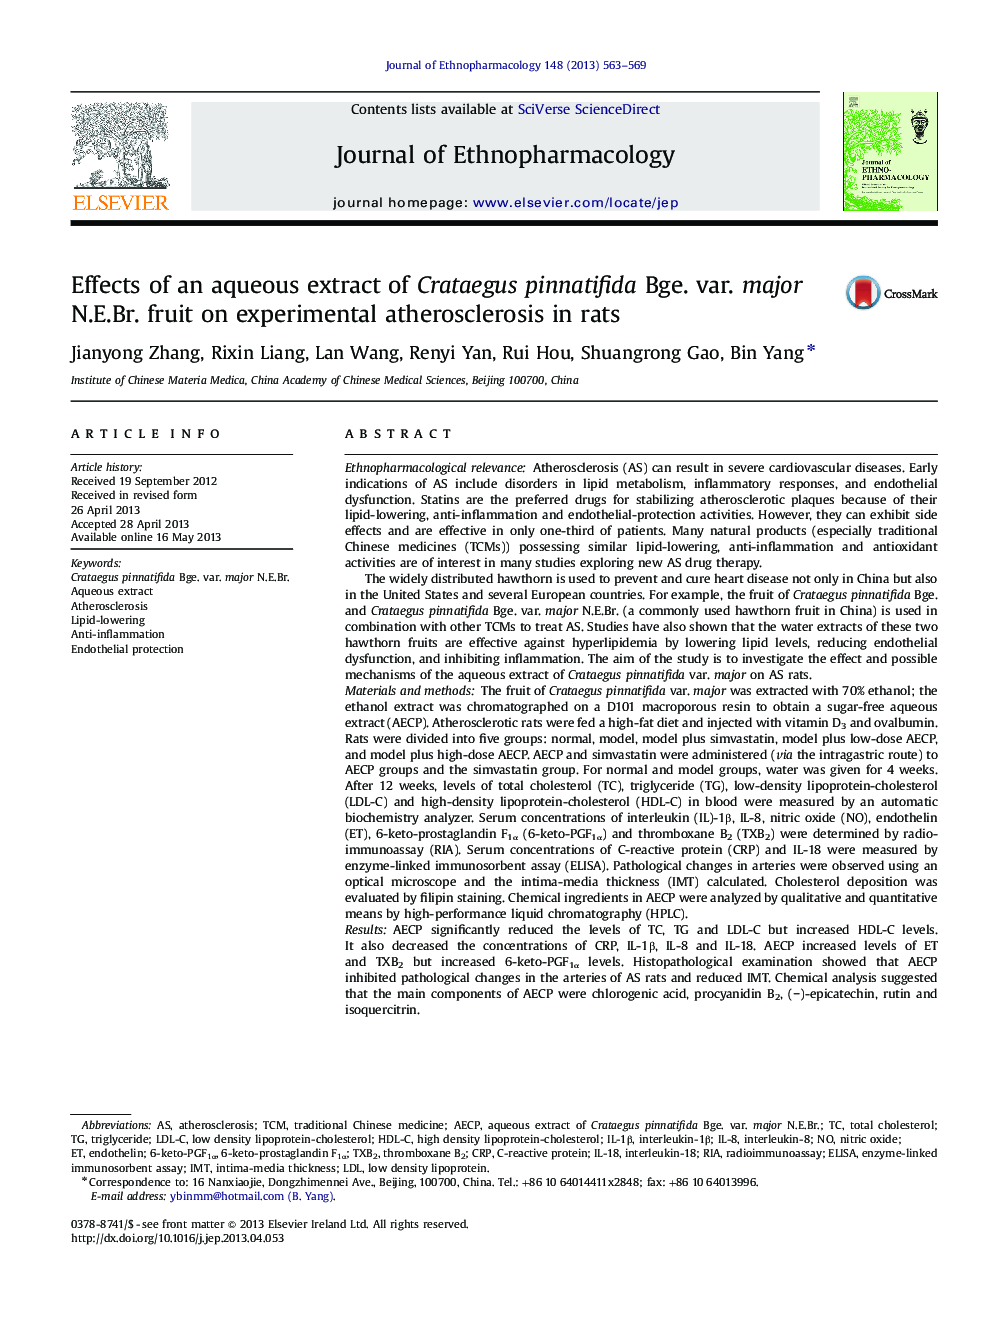 Effects of an aqueous extract of Crataegus pinnatifida Bge. var. major N.E.Br. fruit on experimental atherosclerosis in rats